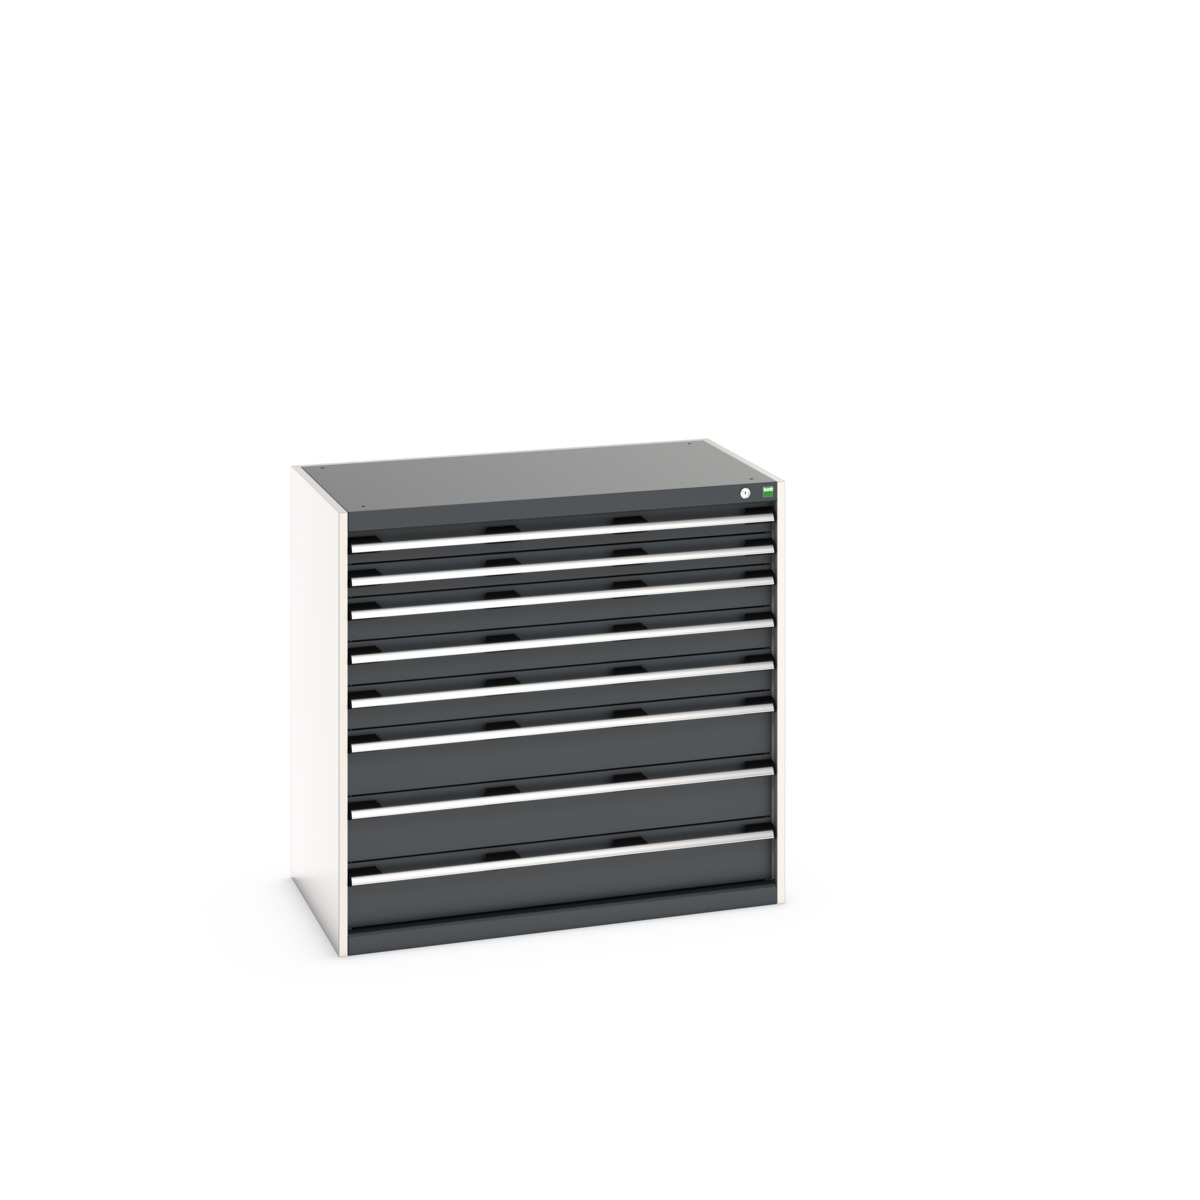 40021033. - cubio drawer cabinet